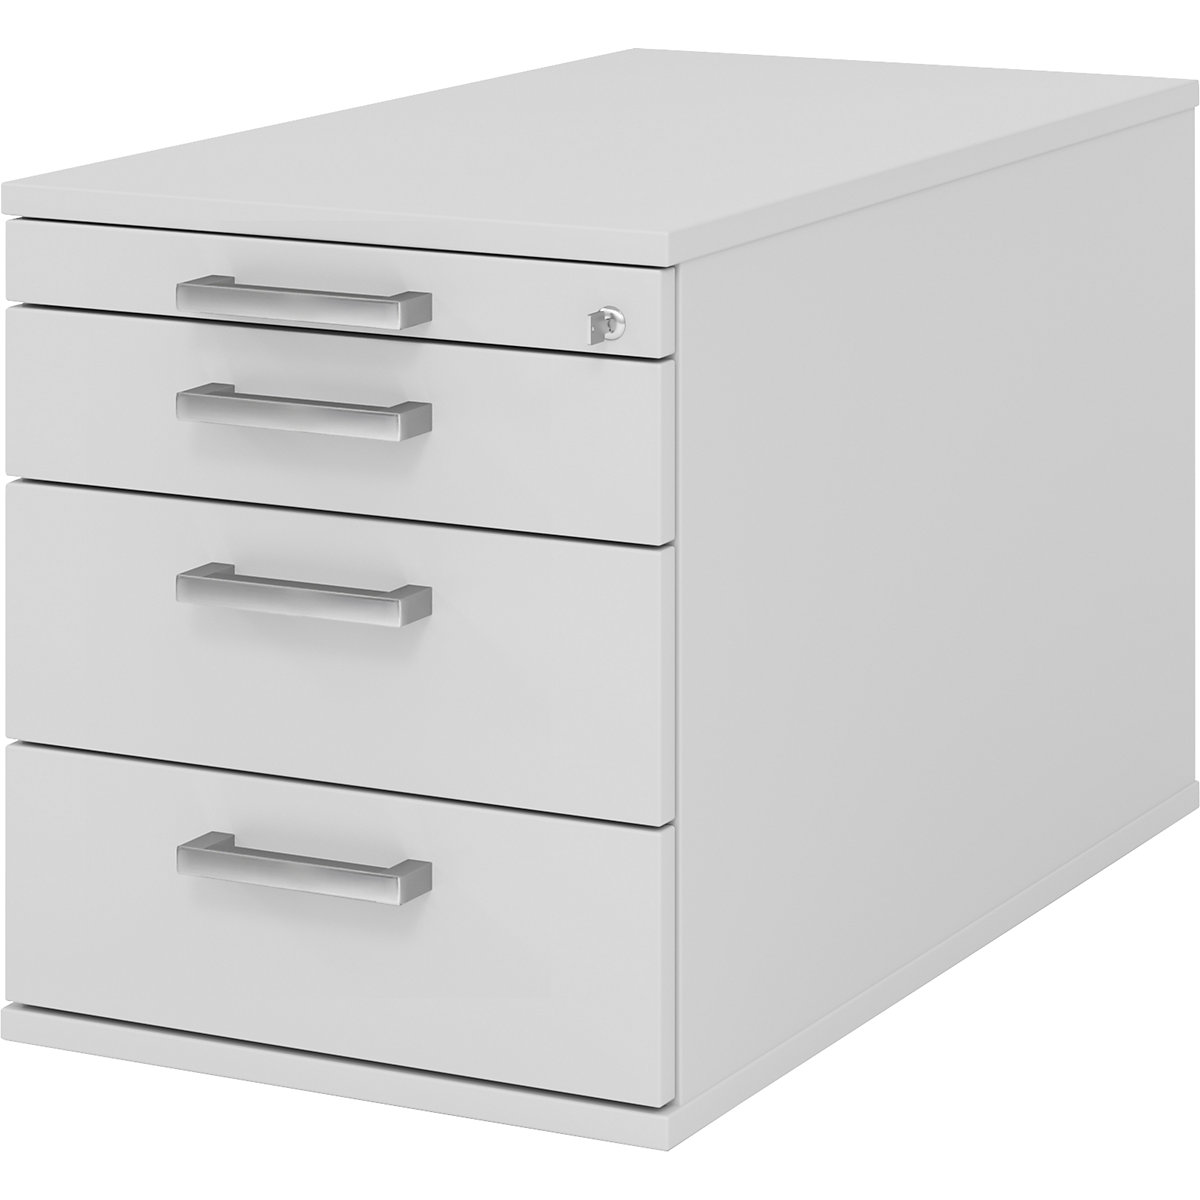 Mobile pedestal NICOLA – eurokraft pro, 1 utensil drawer / 3 material drawers, light grey-7